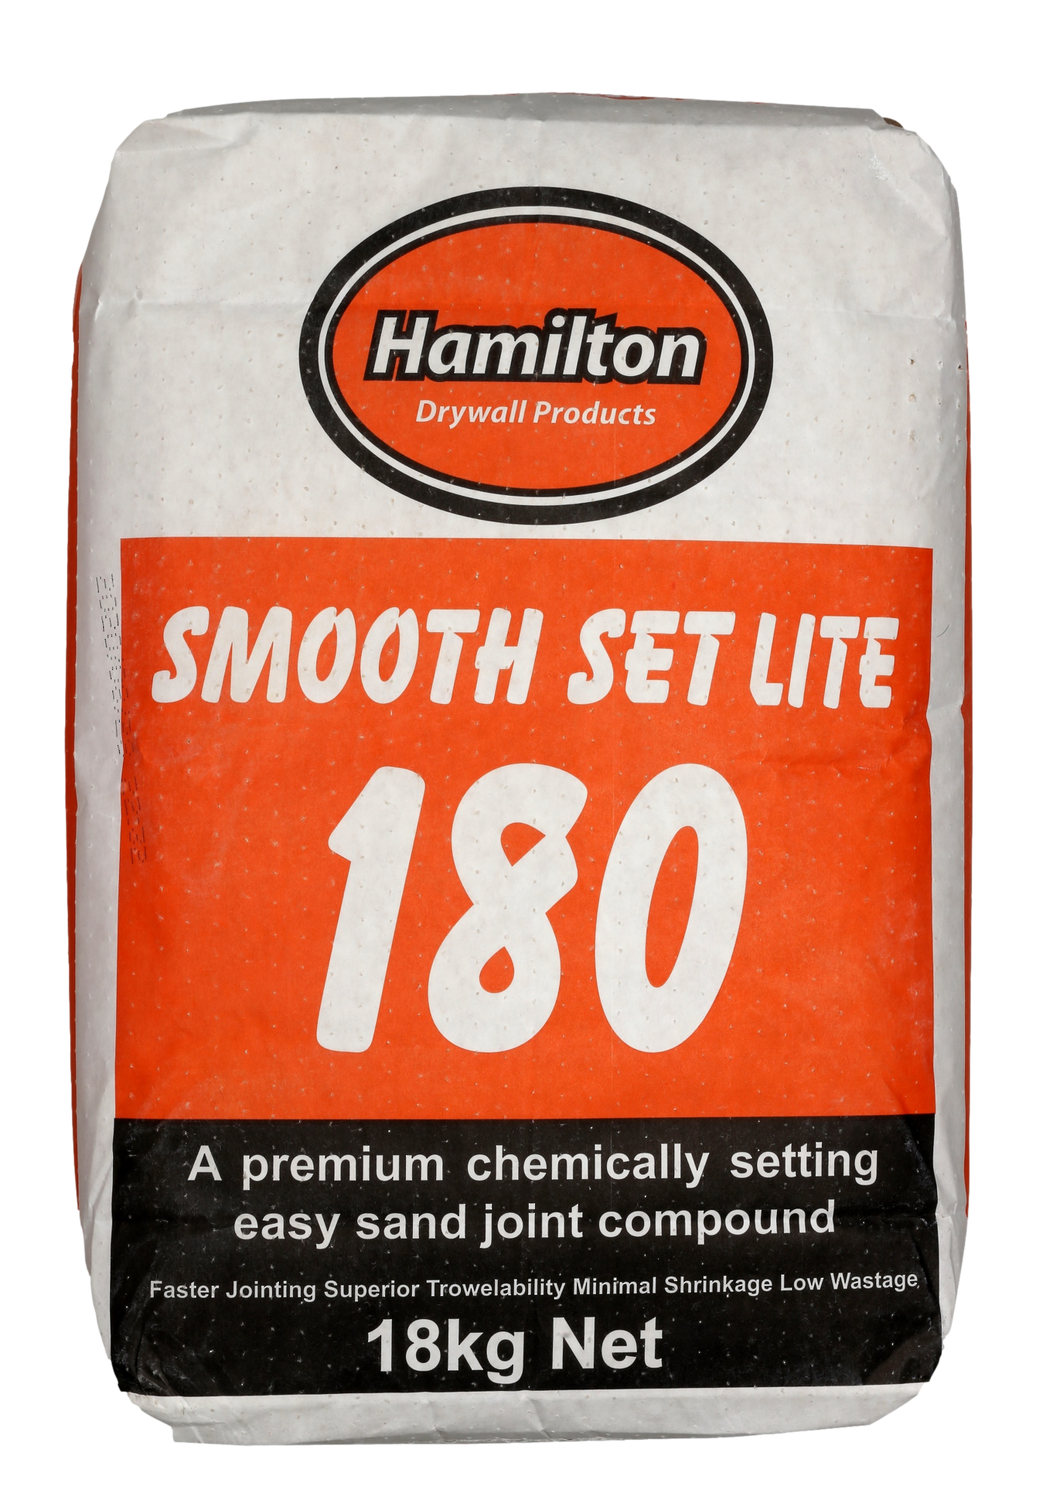 Hamilton Smoothset Lite 180 18Kg Bag